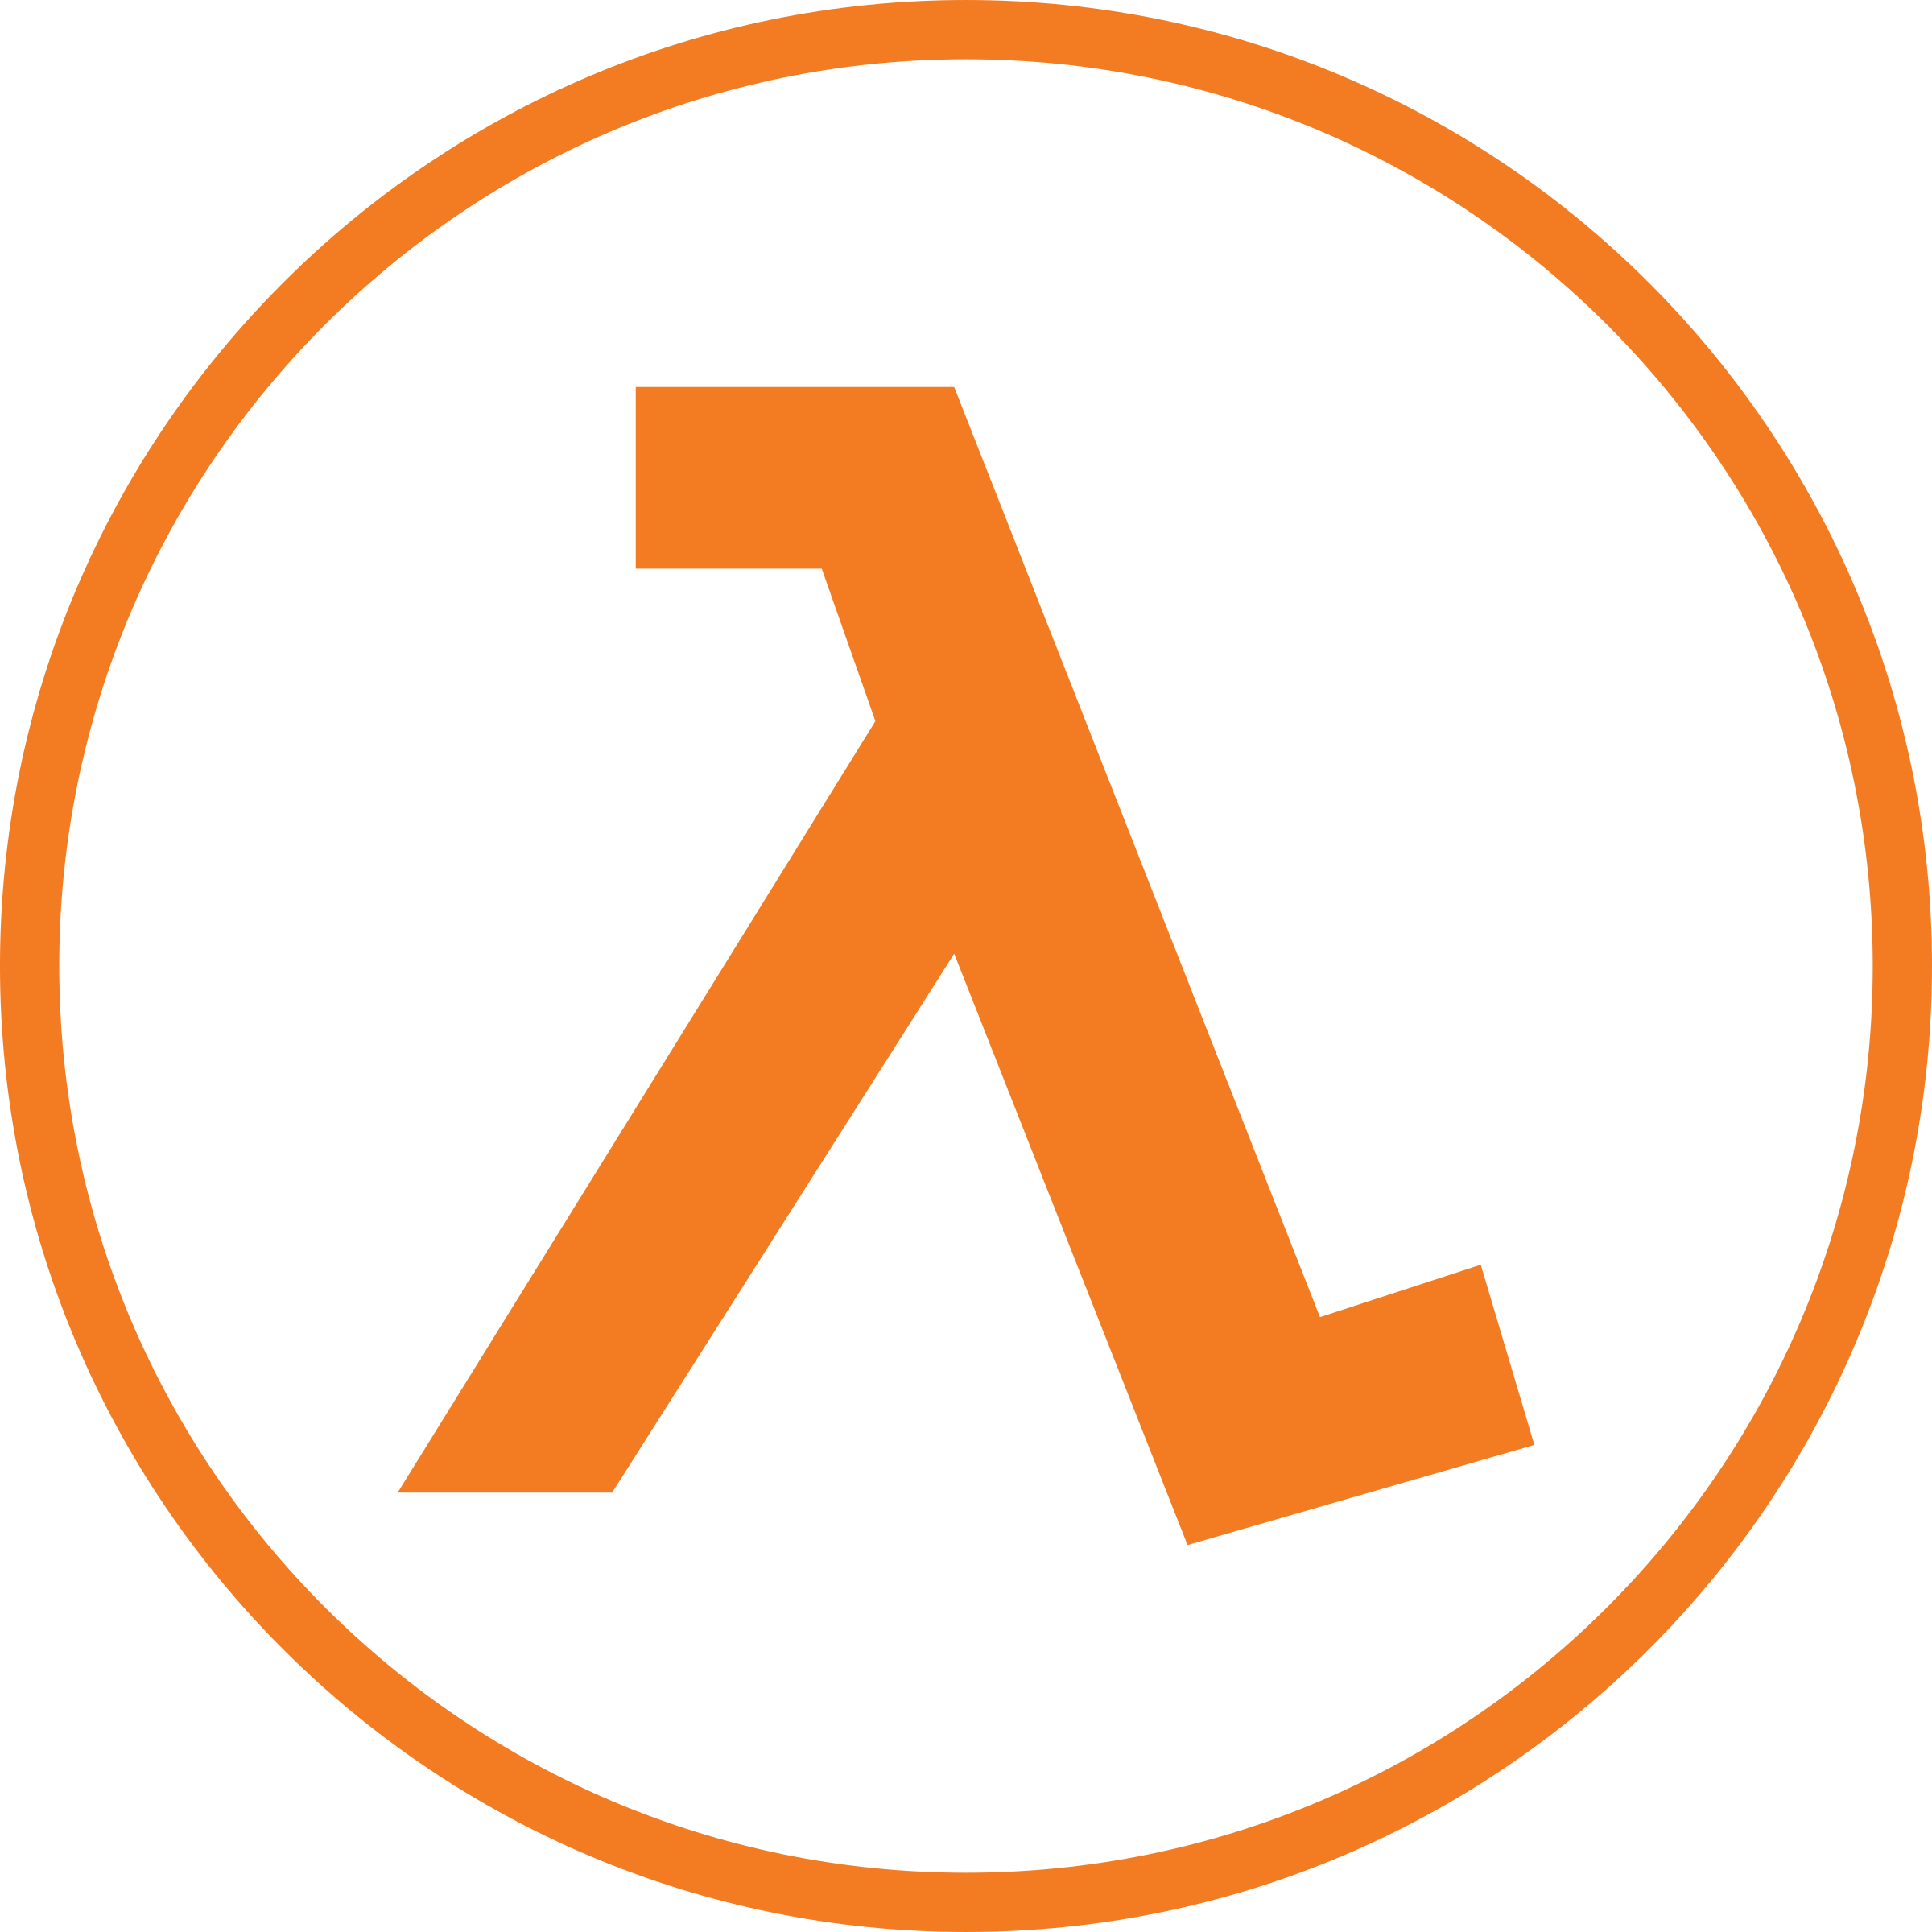 Logo „Half-Life”